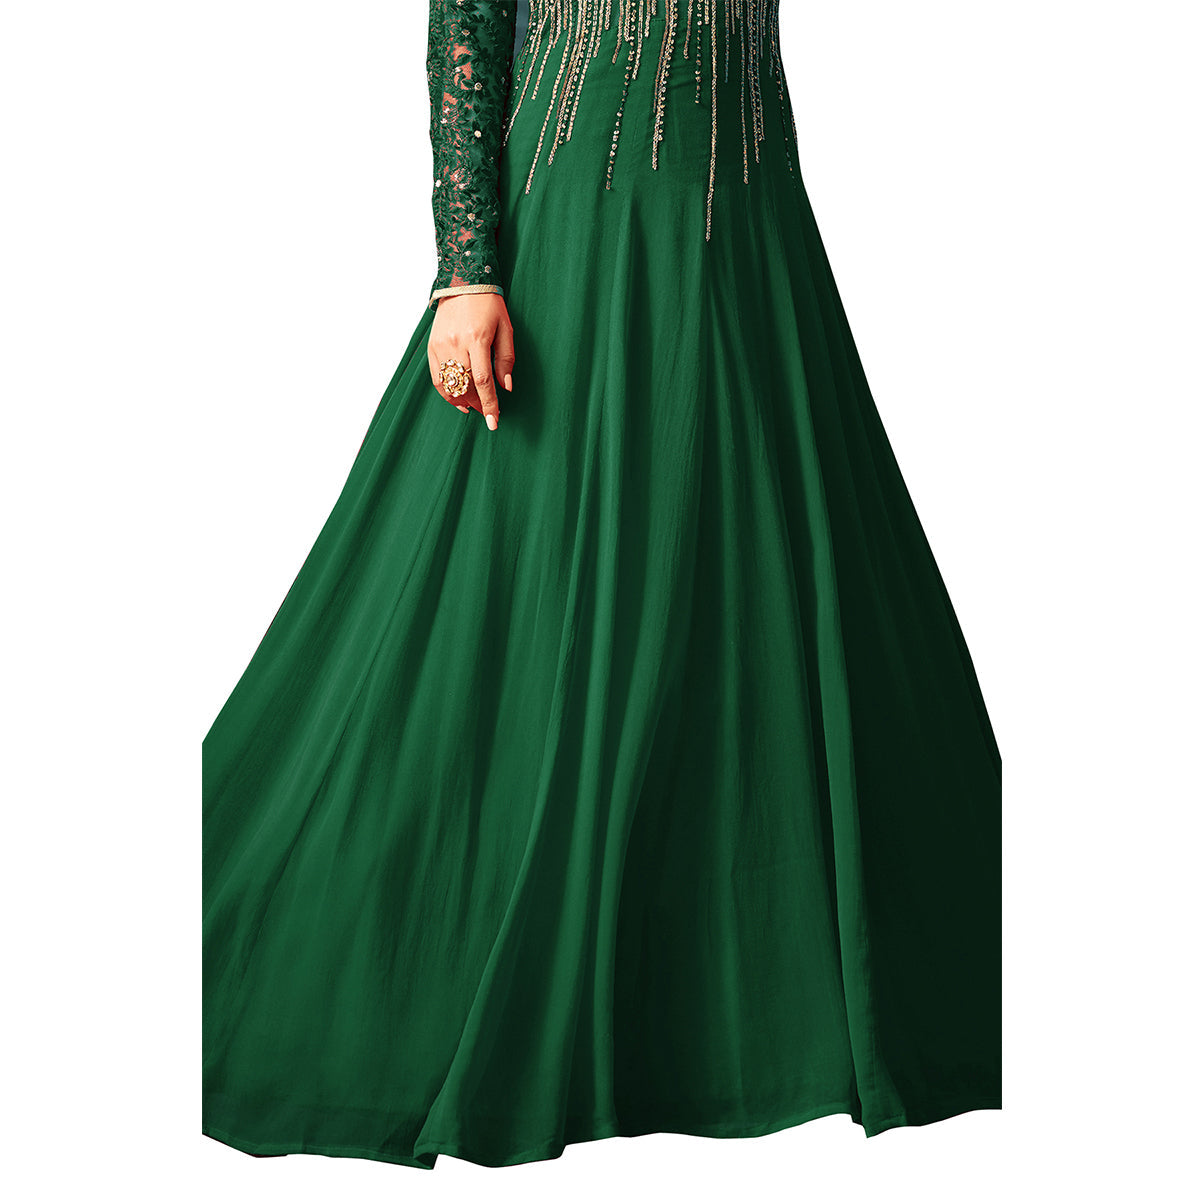 Shafnufab Green Embroidered Semi-Stitched Anarkali Suit